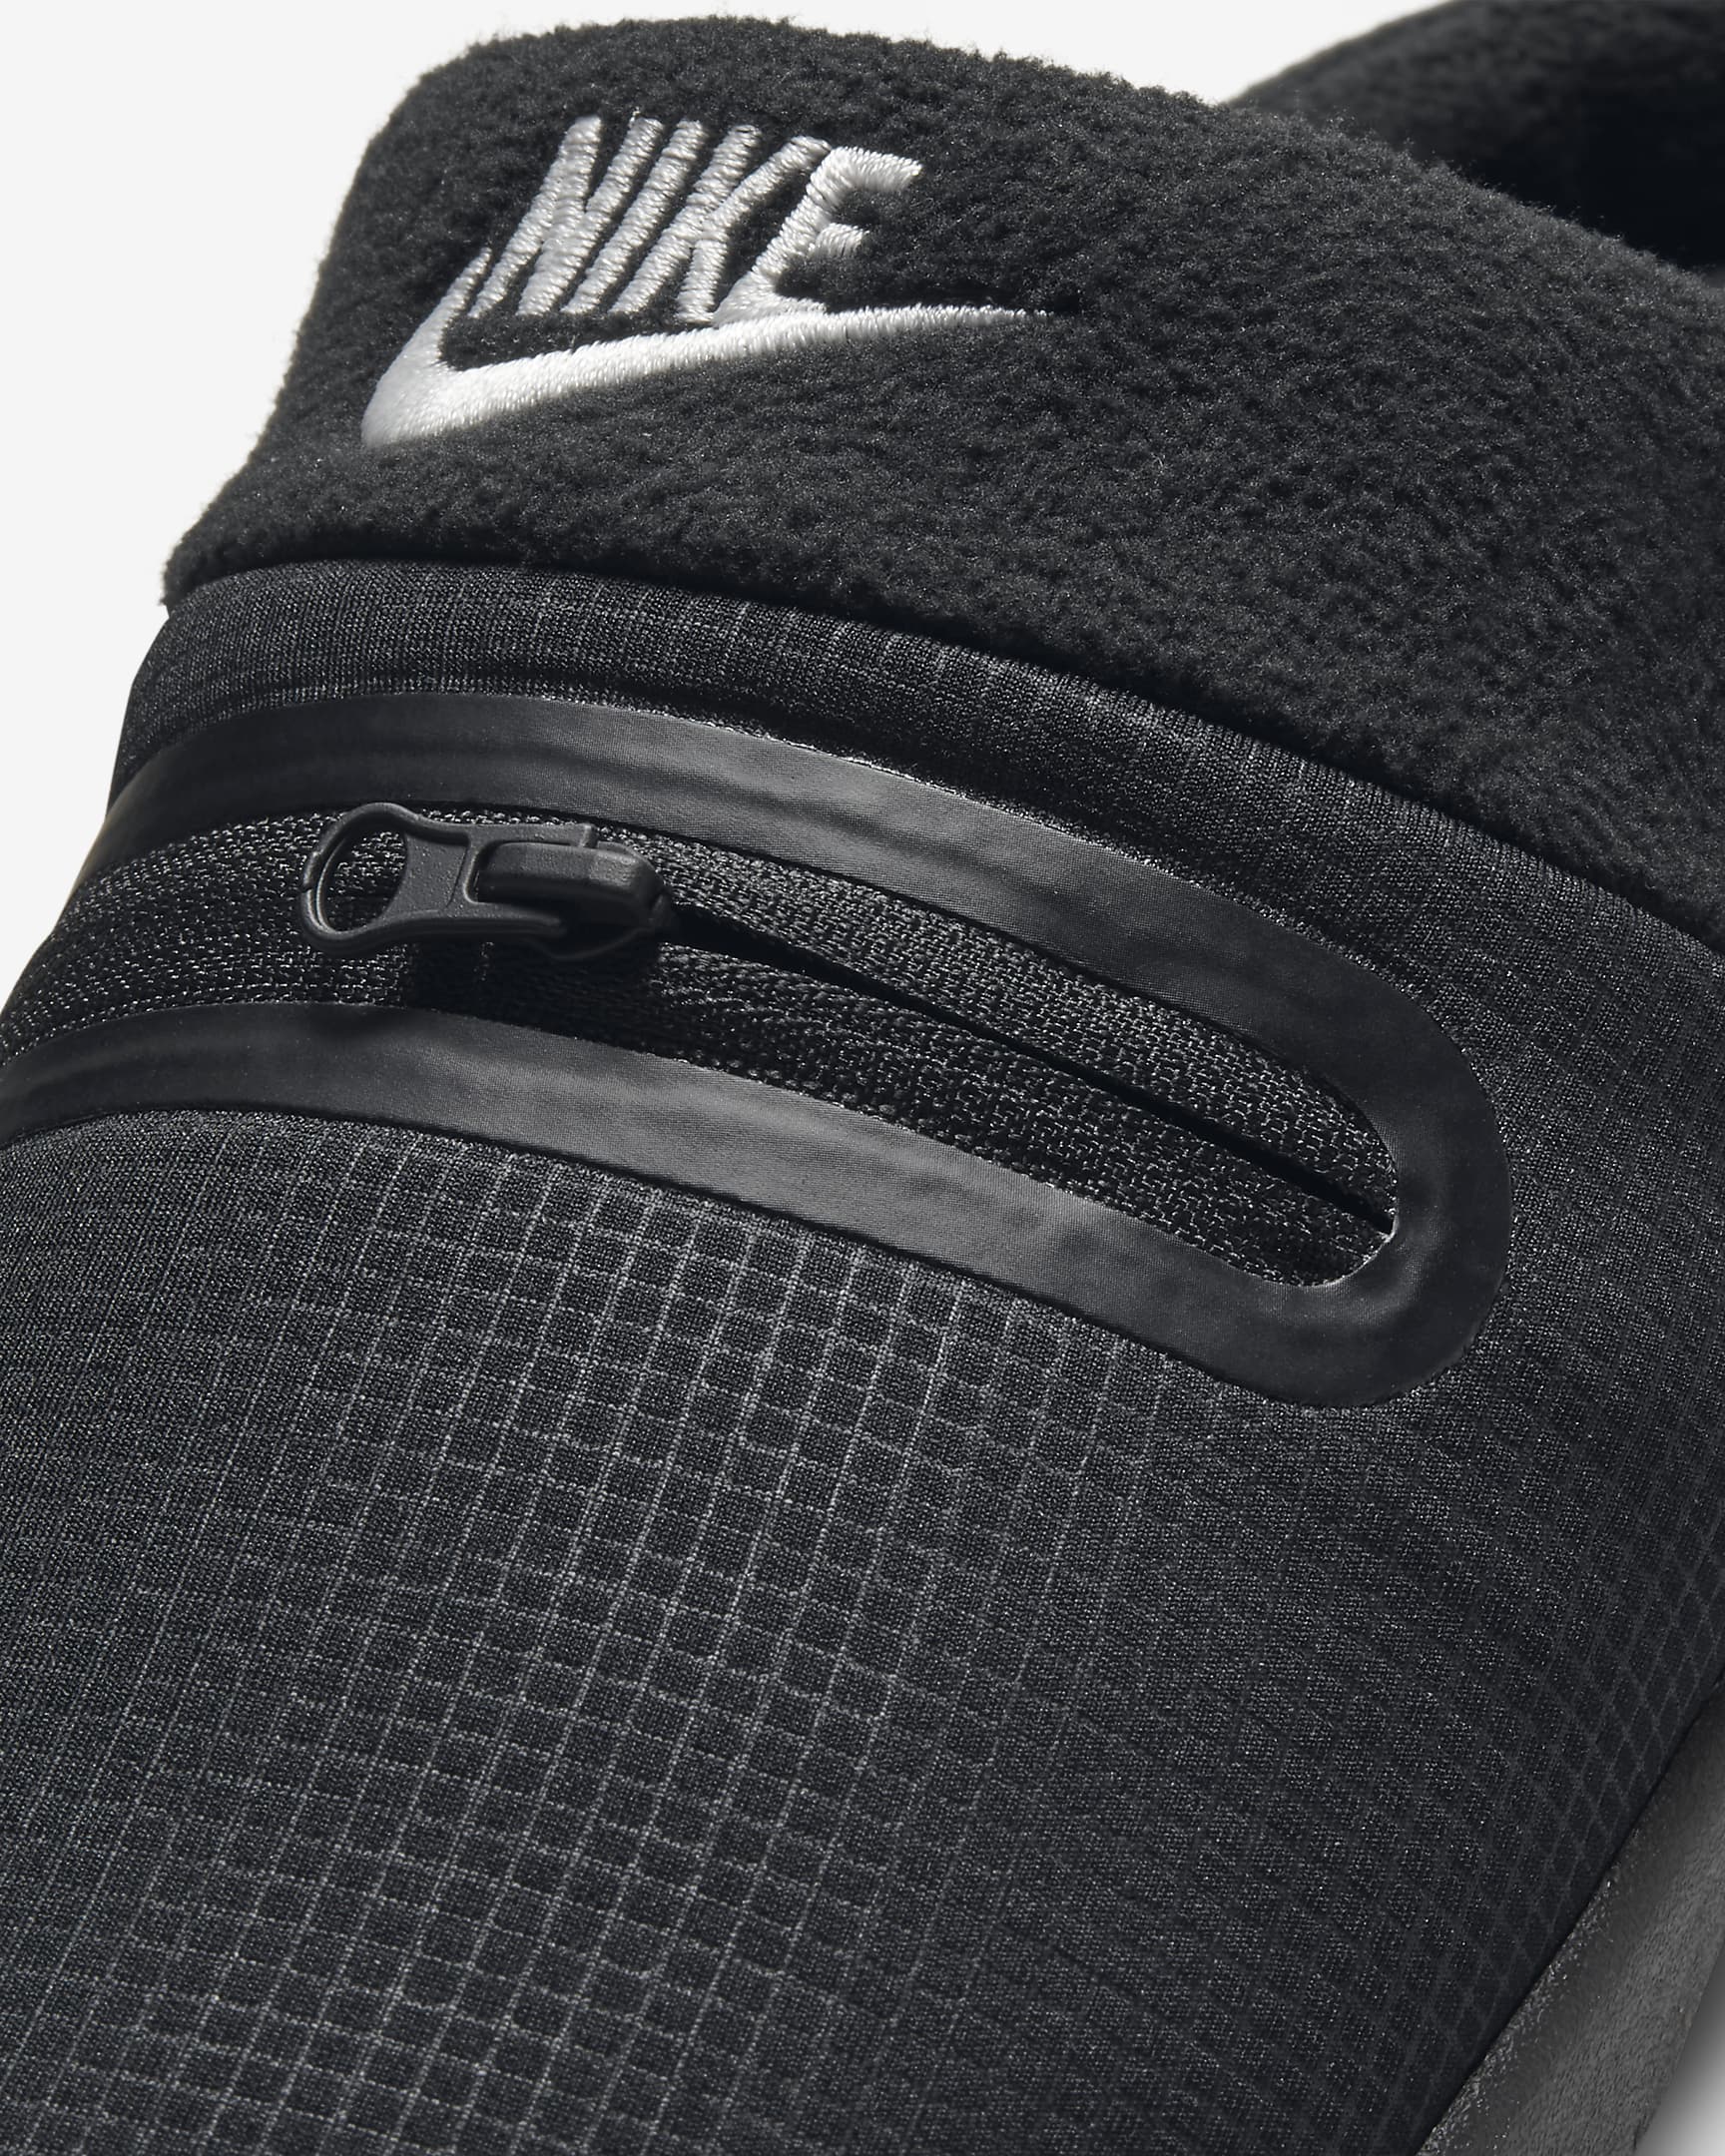 Nike Burrow Men's Slippers. Nike.com